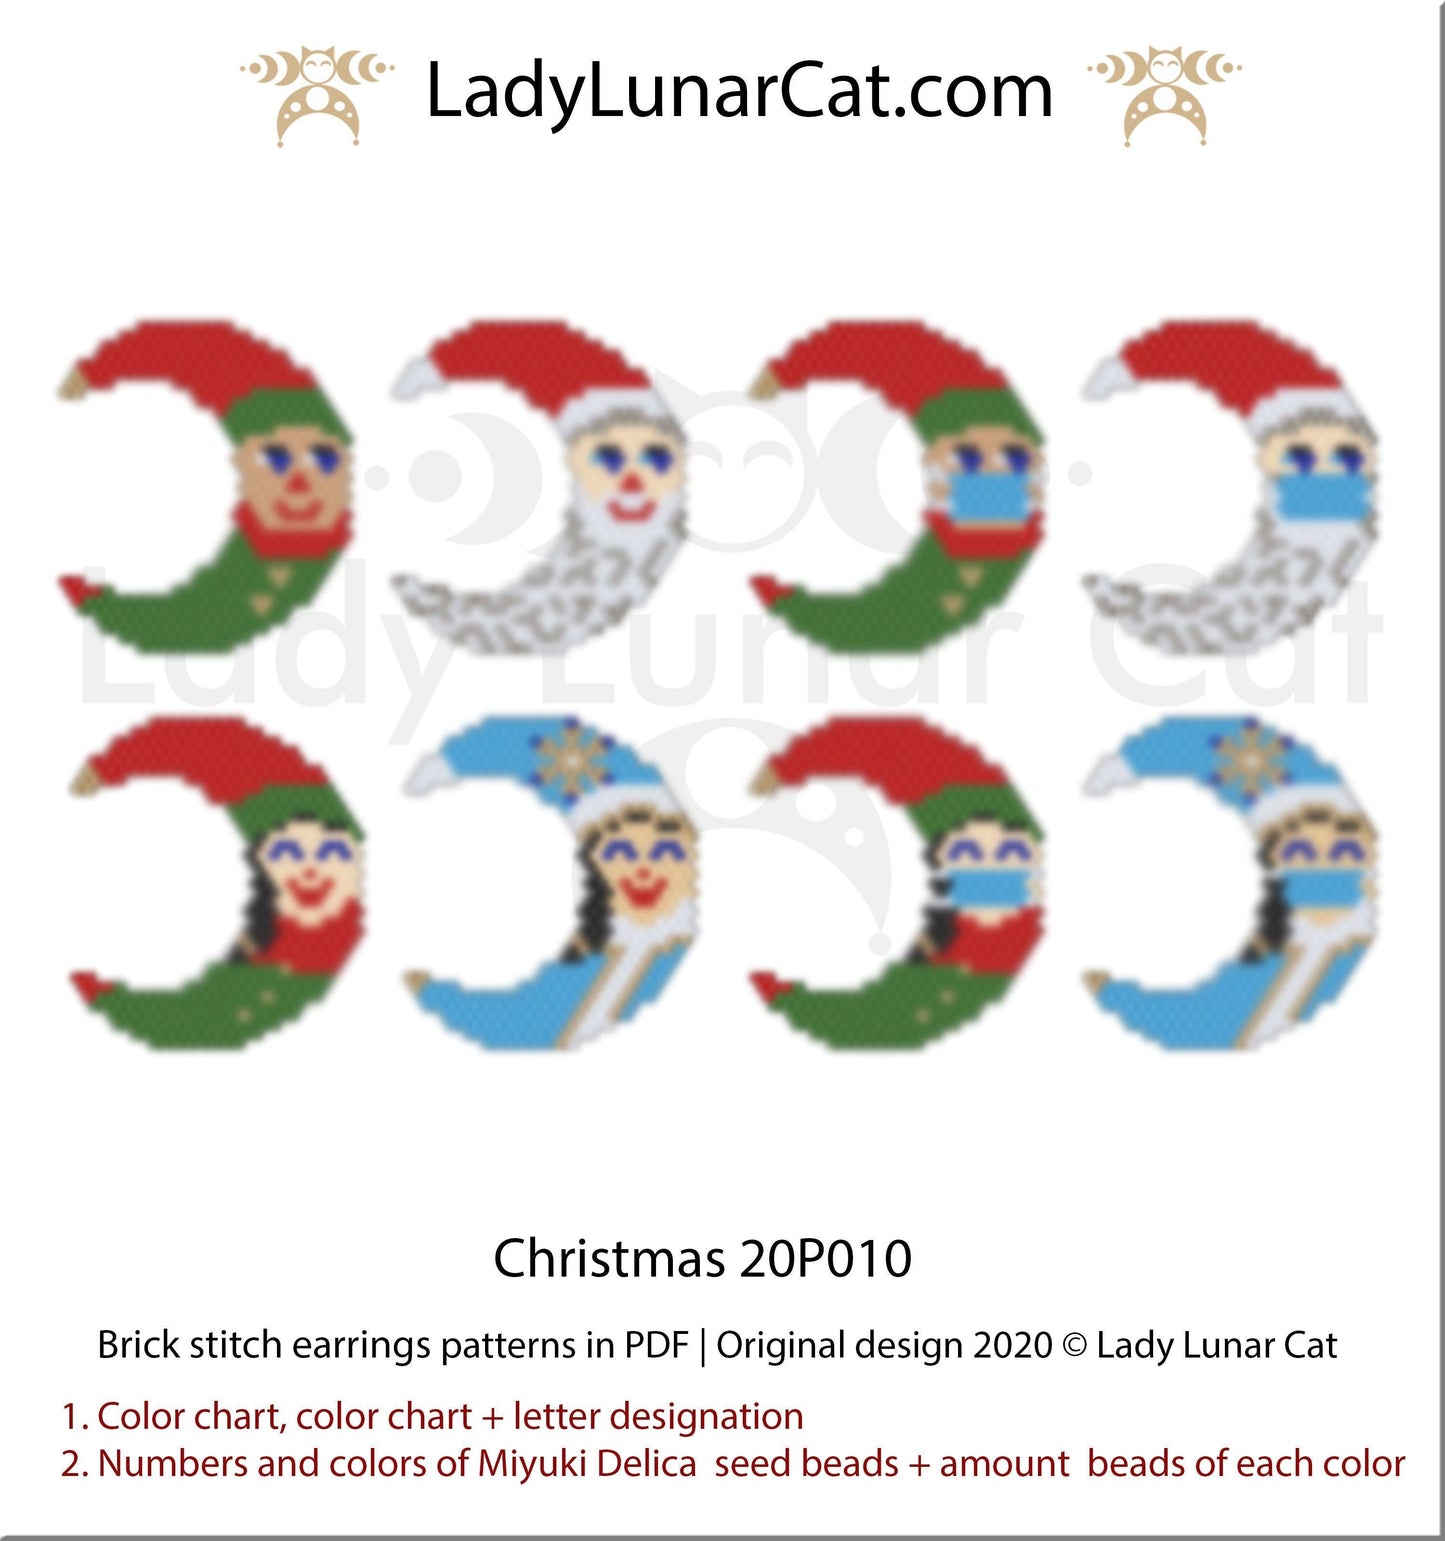 Brick stitch pattern for beading Christmas 20P010 | Winter Beaded earrings tutorial LadyLunarCat